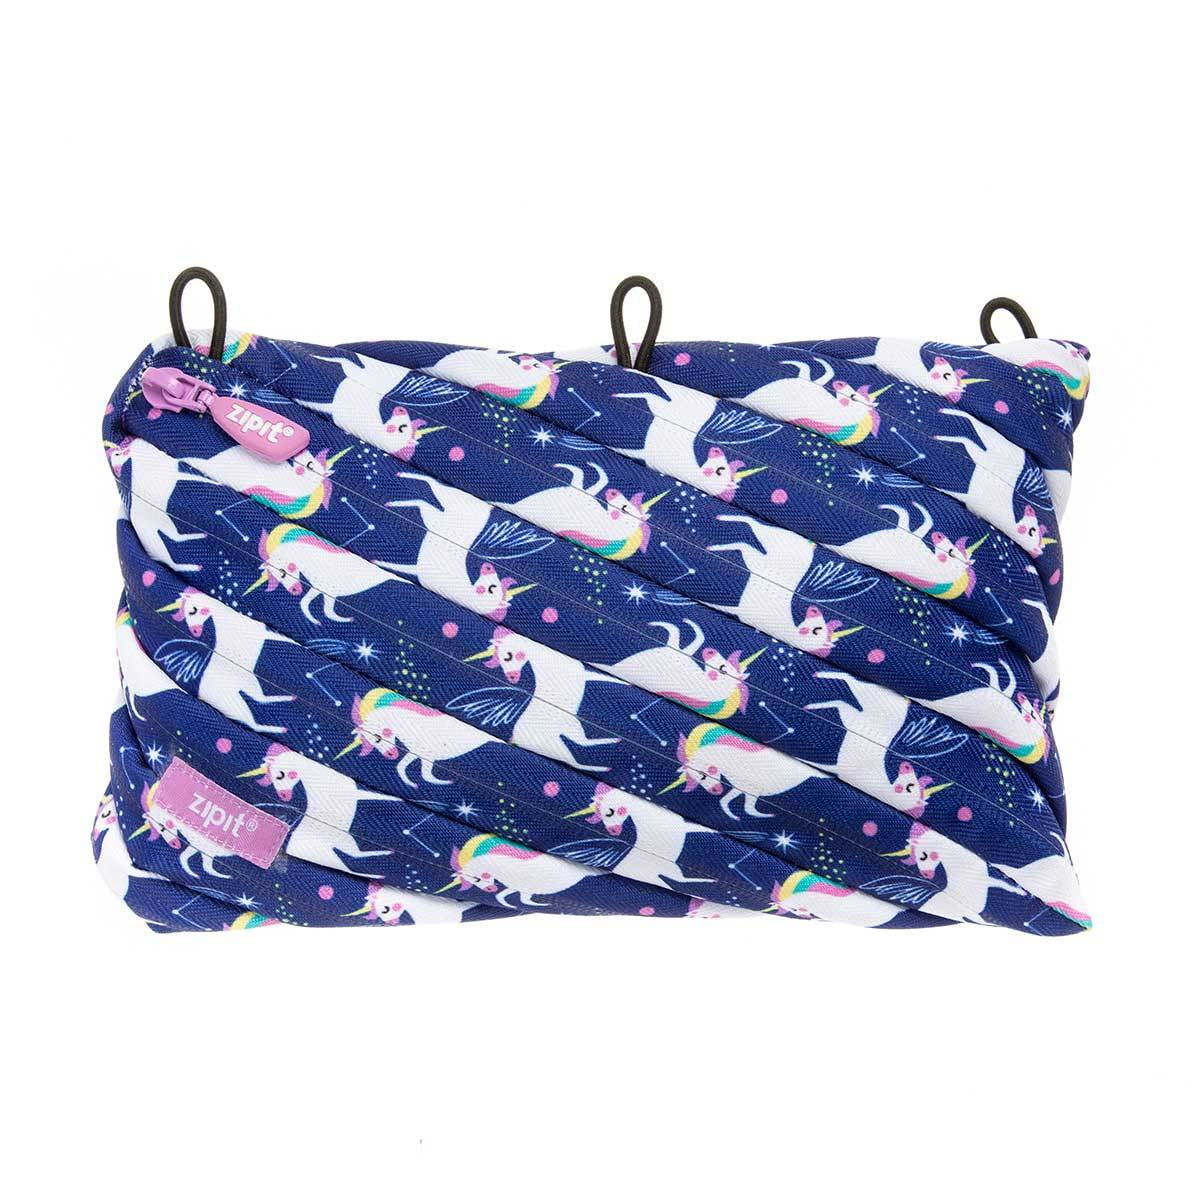 yangzhoujinbei Exquisite Colorful Unicorn Ring Zipper File Bag Pencil Case Plastic Portfolio Bag H01 